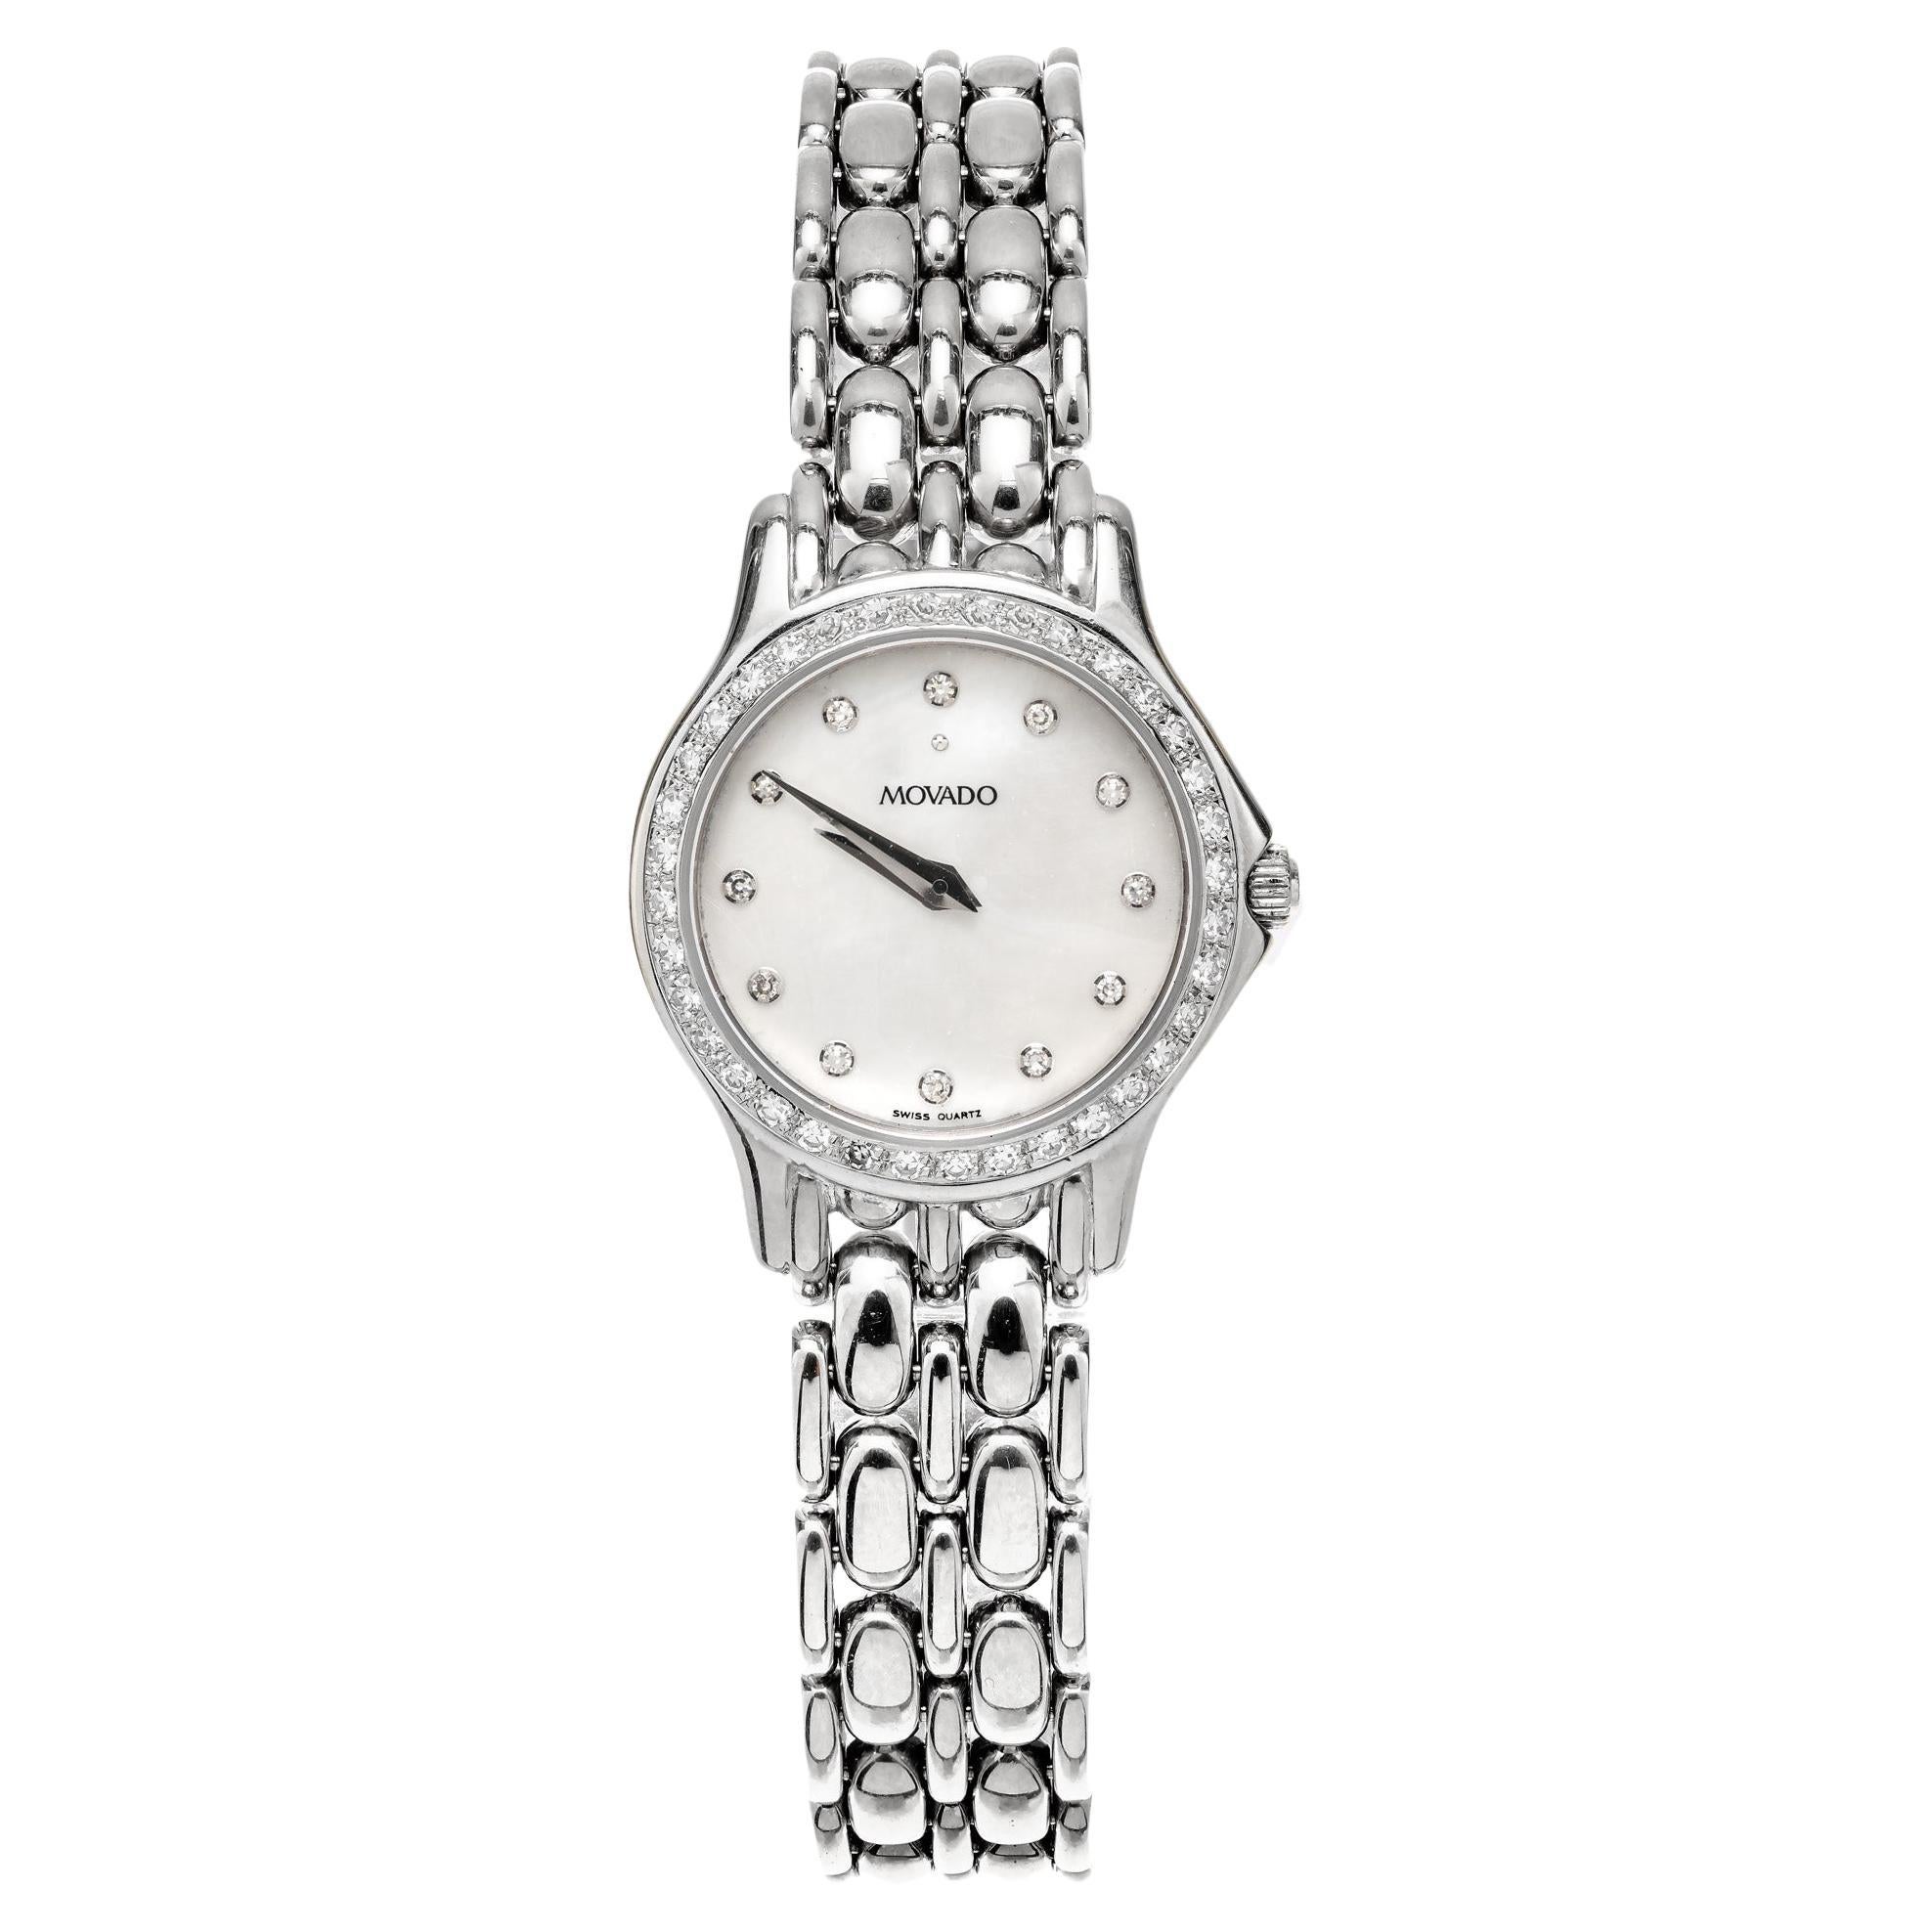 Movado Lady's Diamond Bezel White Gold Wristwatch